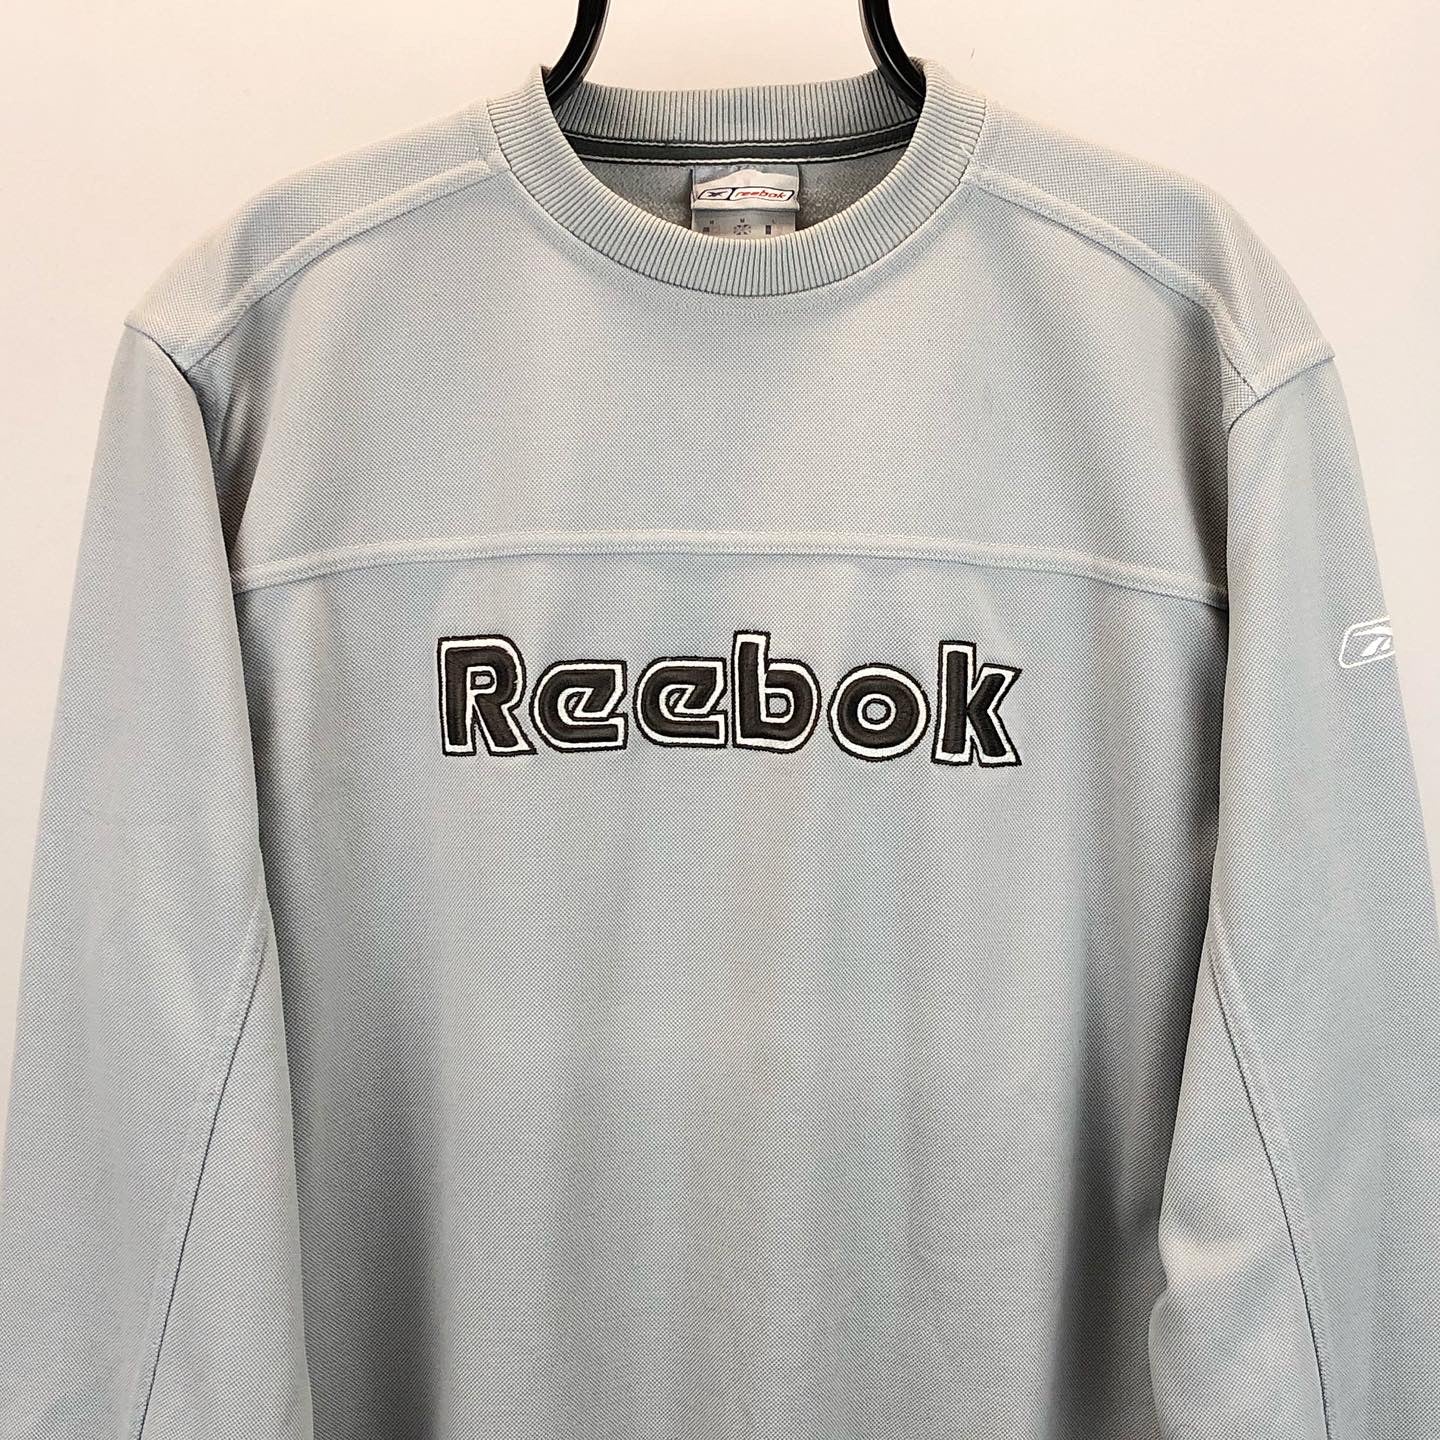 Vintage Reebok Spellout Sweatshirt in Silver/Grey - Men’s Medium/Women’s Large